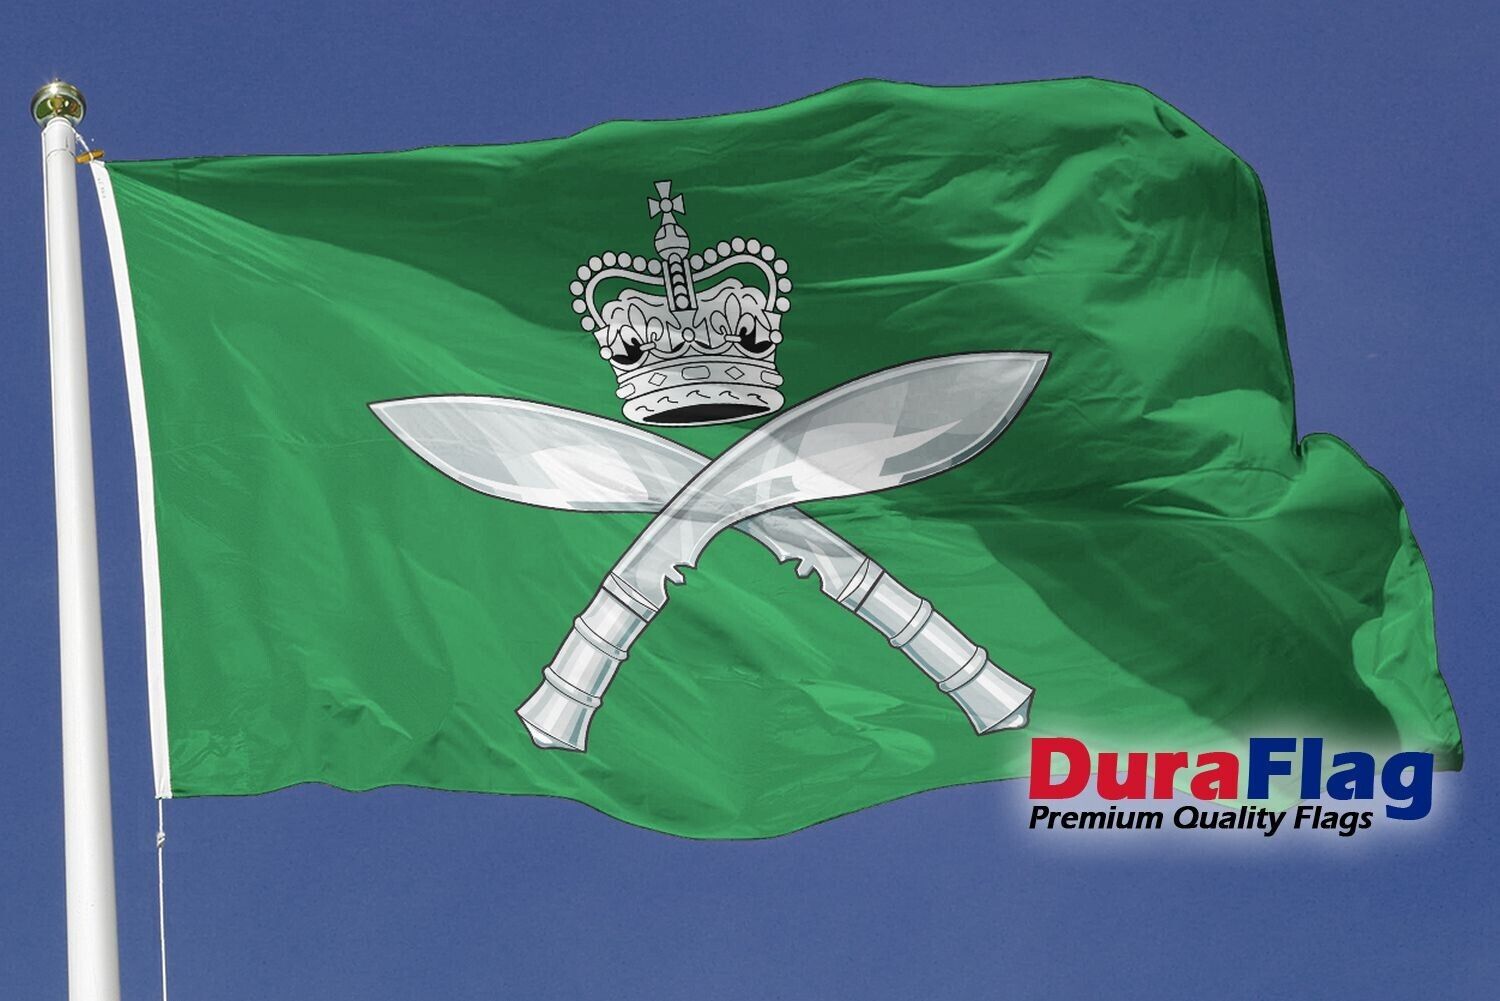 Royal Gurkhas Duraflag Premium Quality (20x12inch) Flag